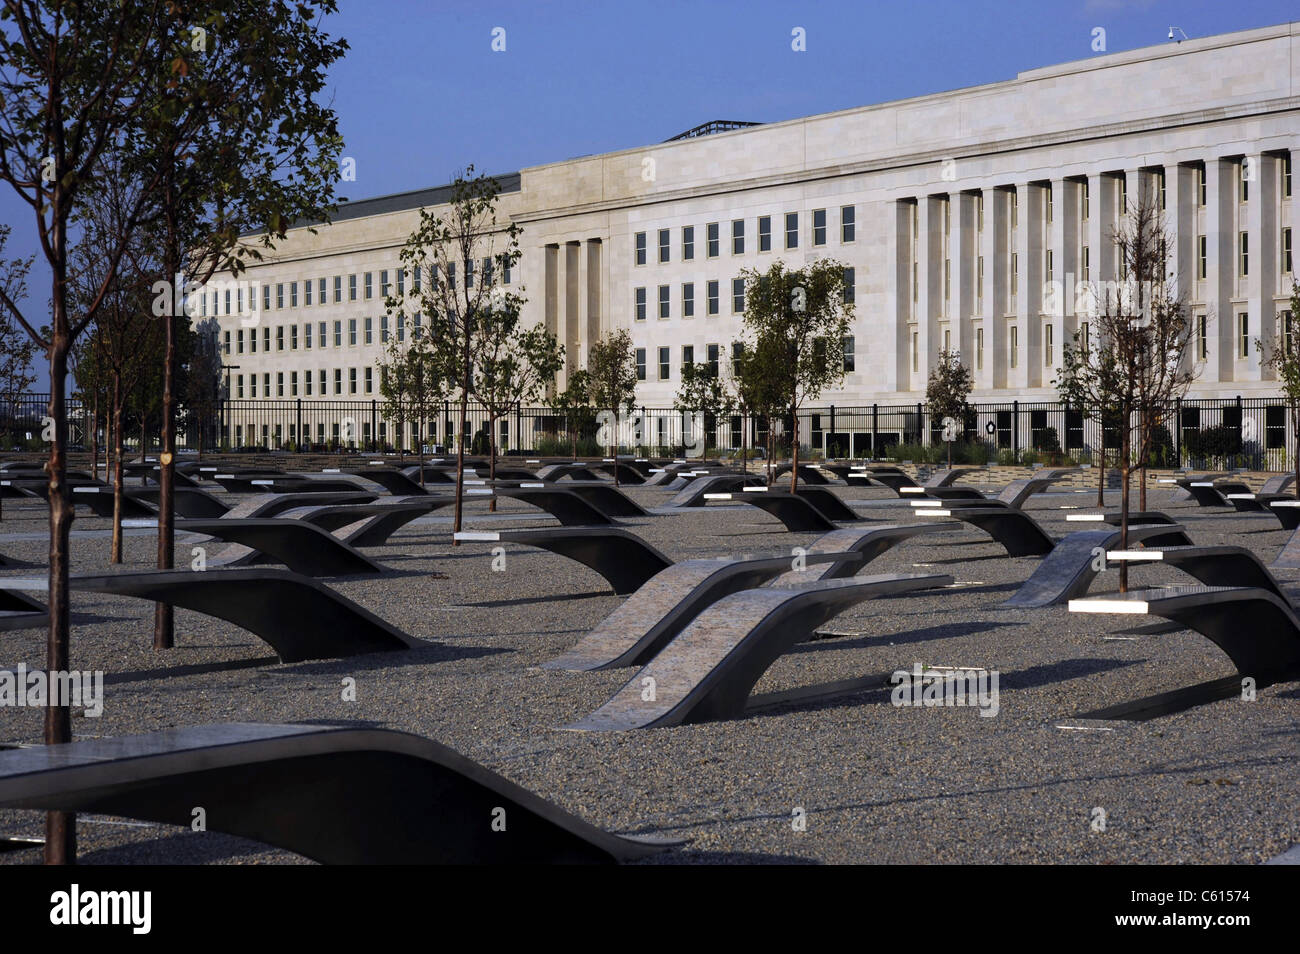 https://c8.alamy.com/comp/C61574/the-pentagon-memorial-honoring-the-184-people-killed-at-the-pentagon-C61574.jpg